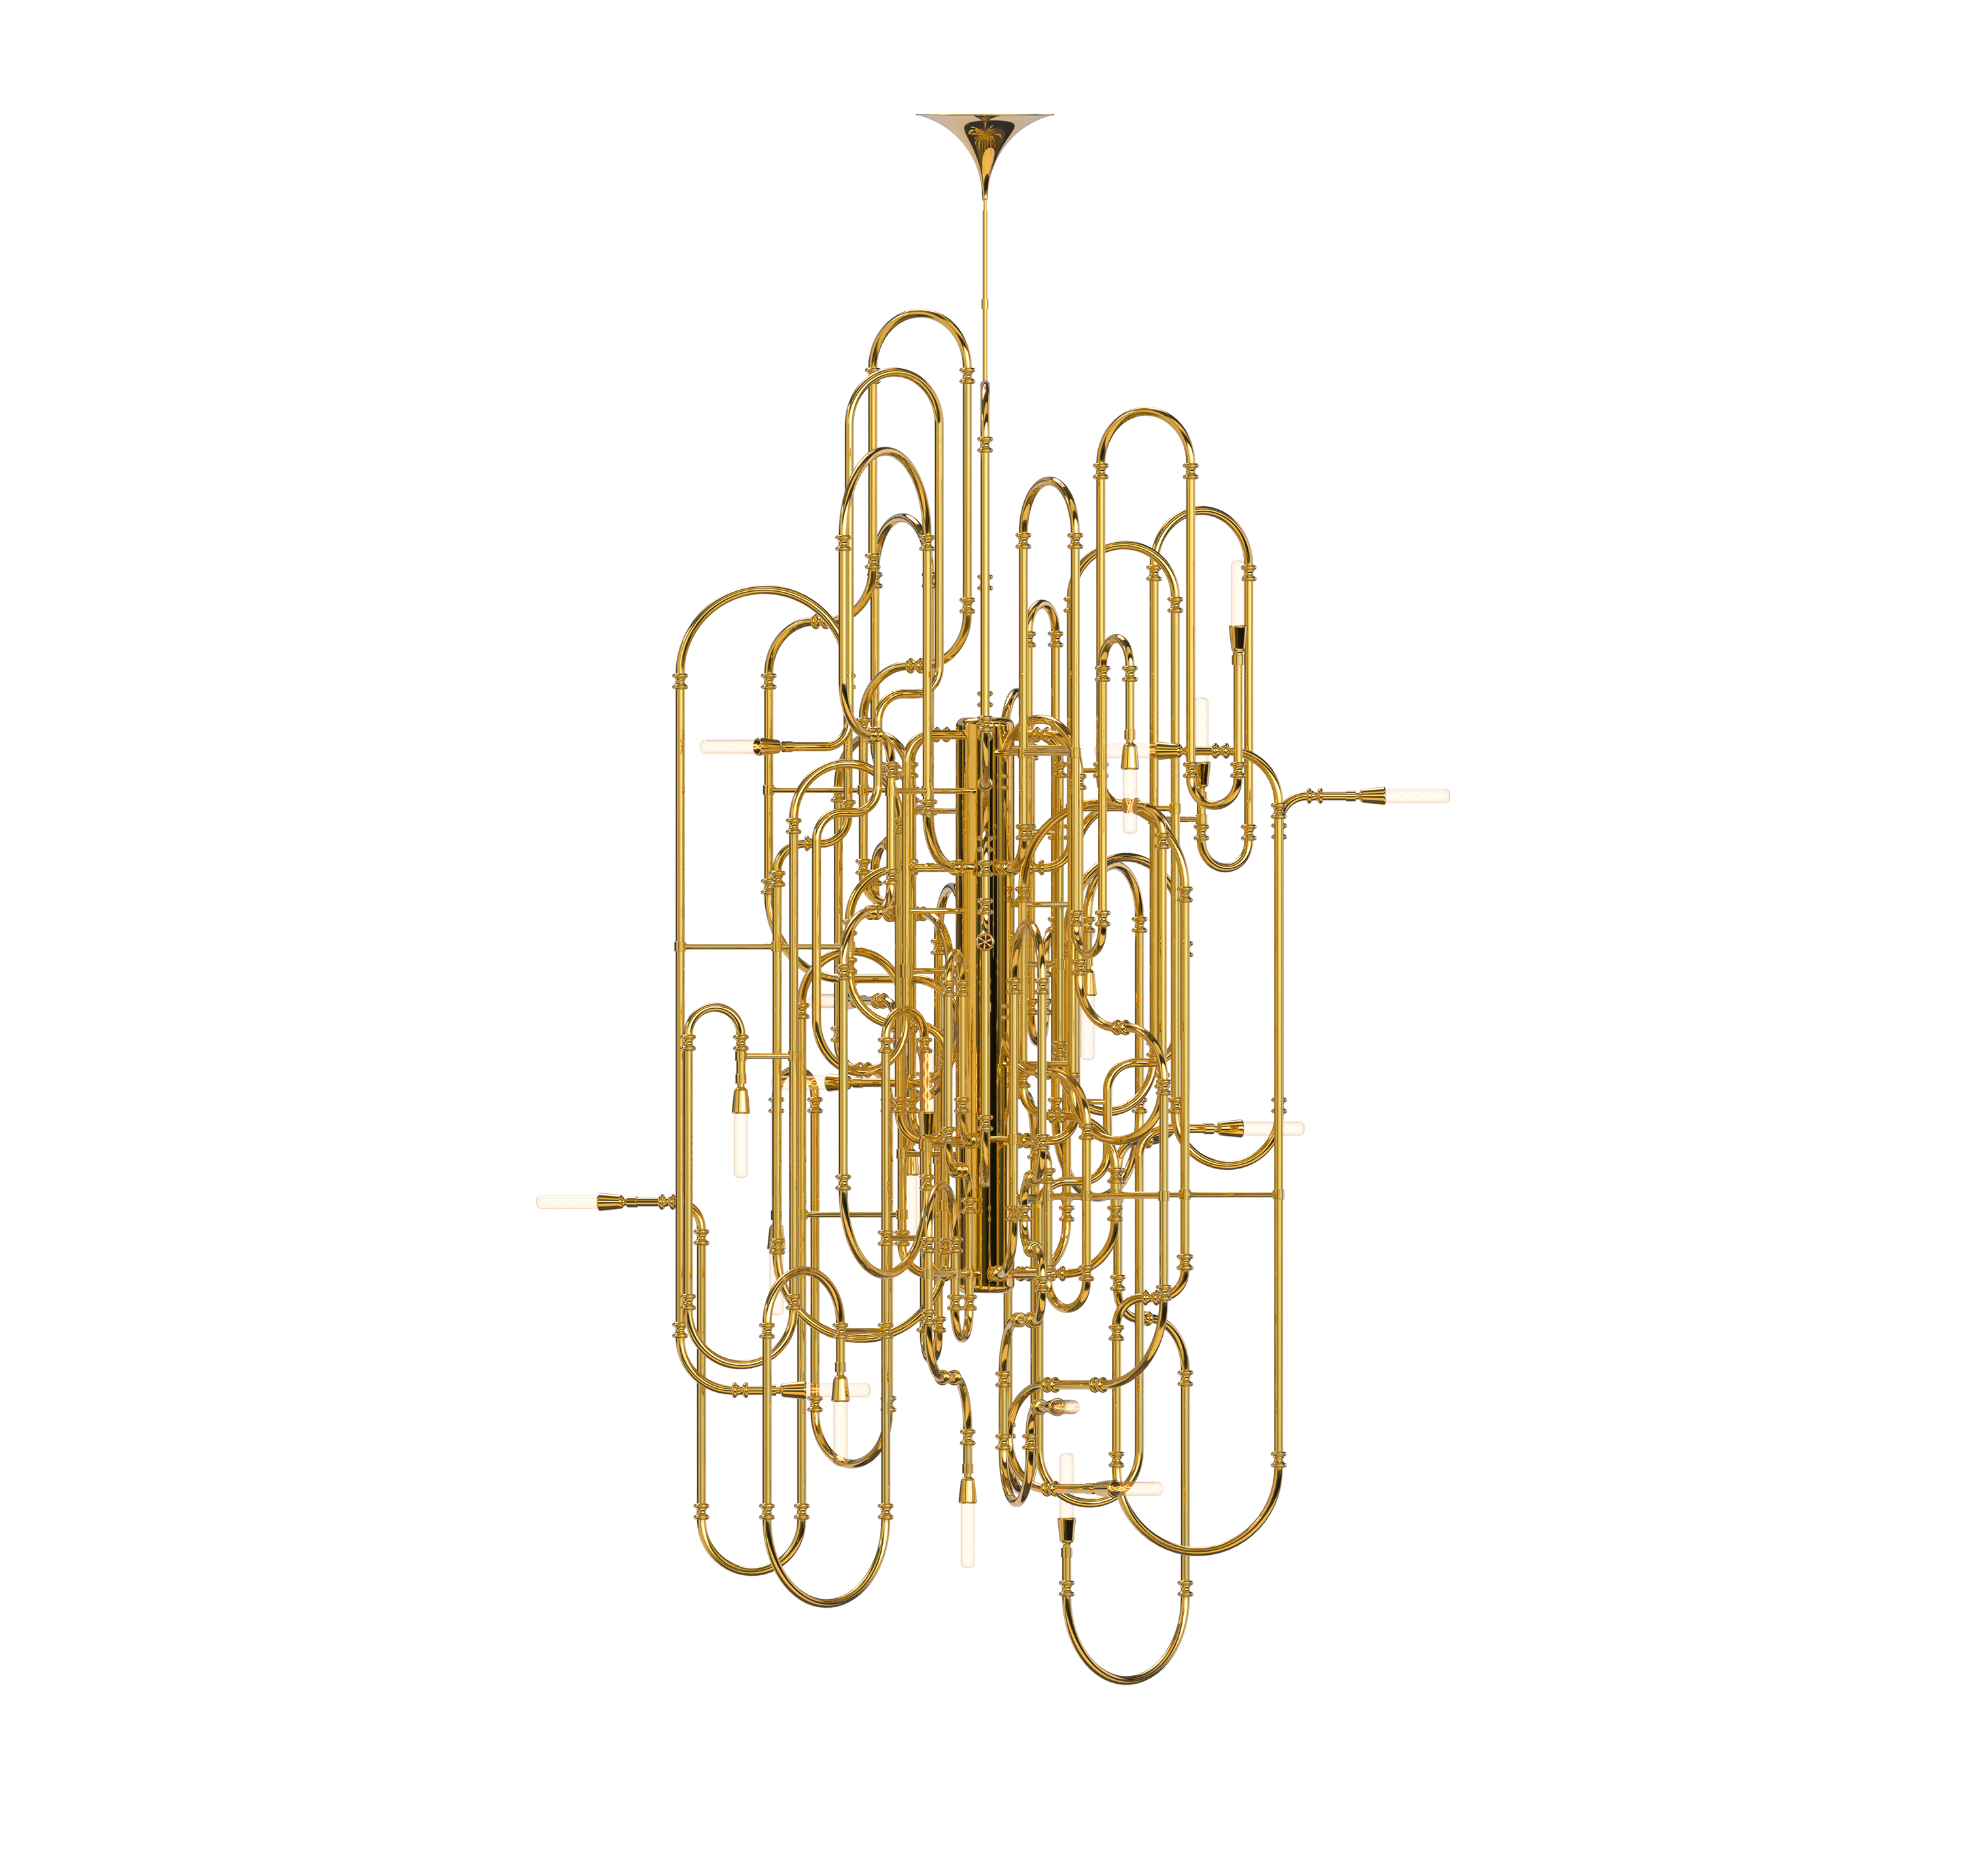 The Best Contemporary Lighting: Clark Pendant Lamp